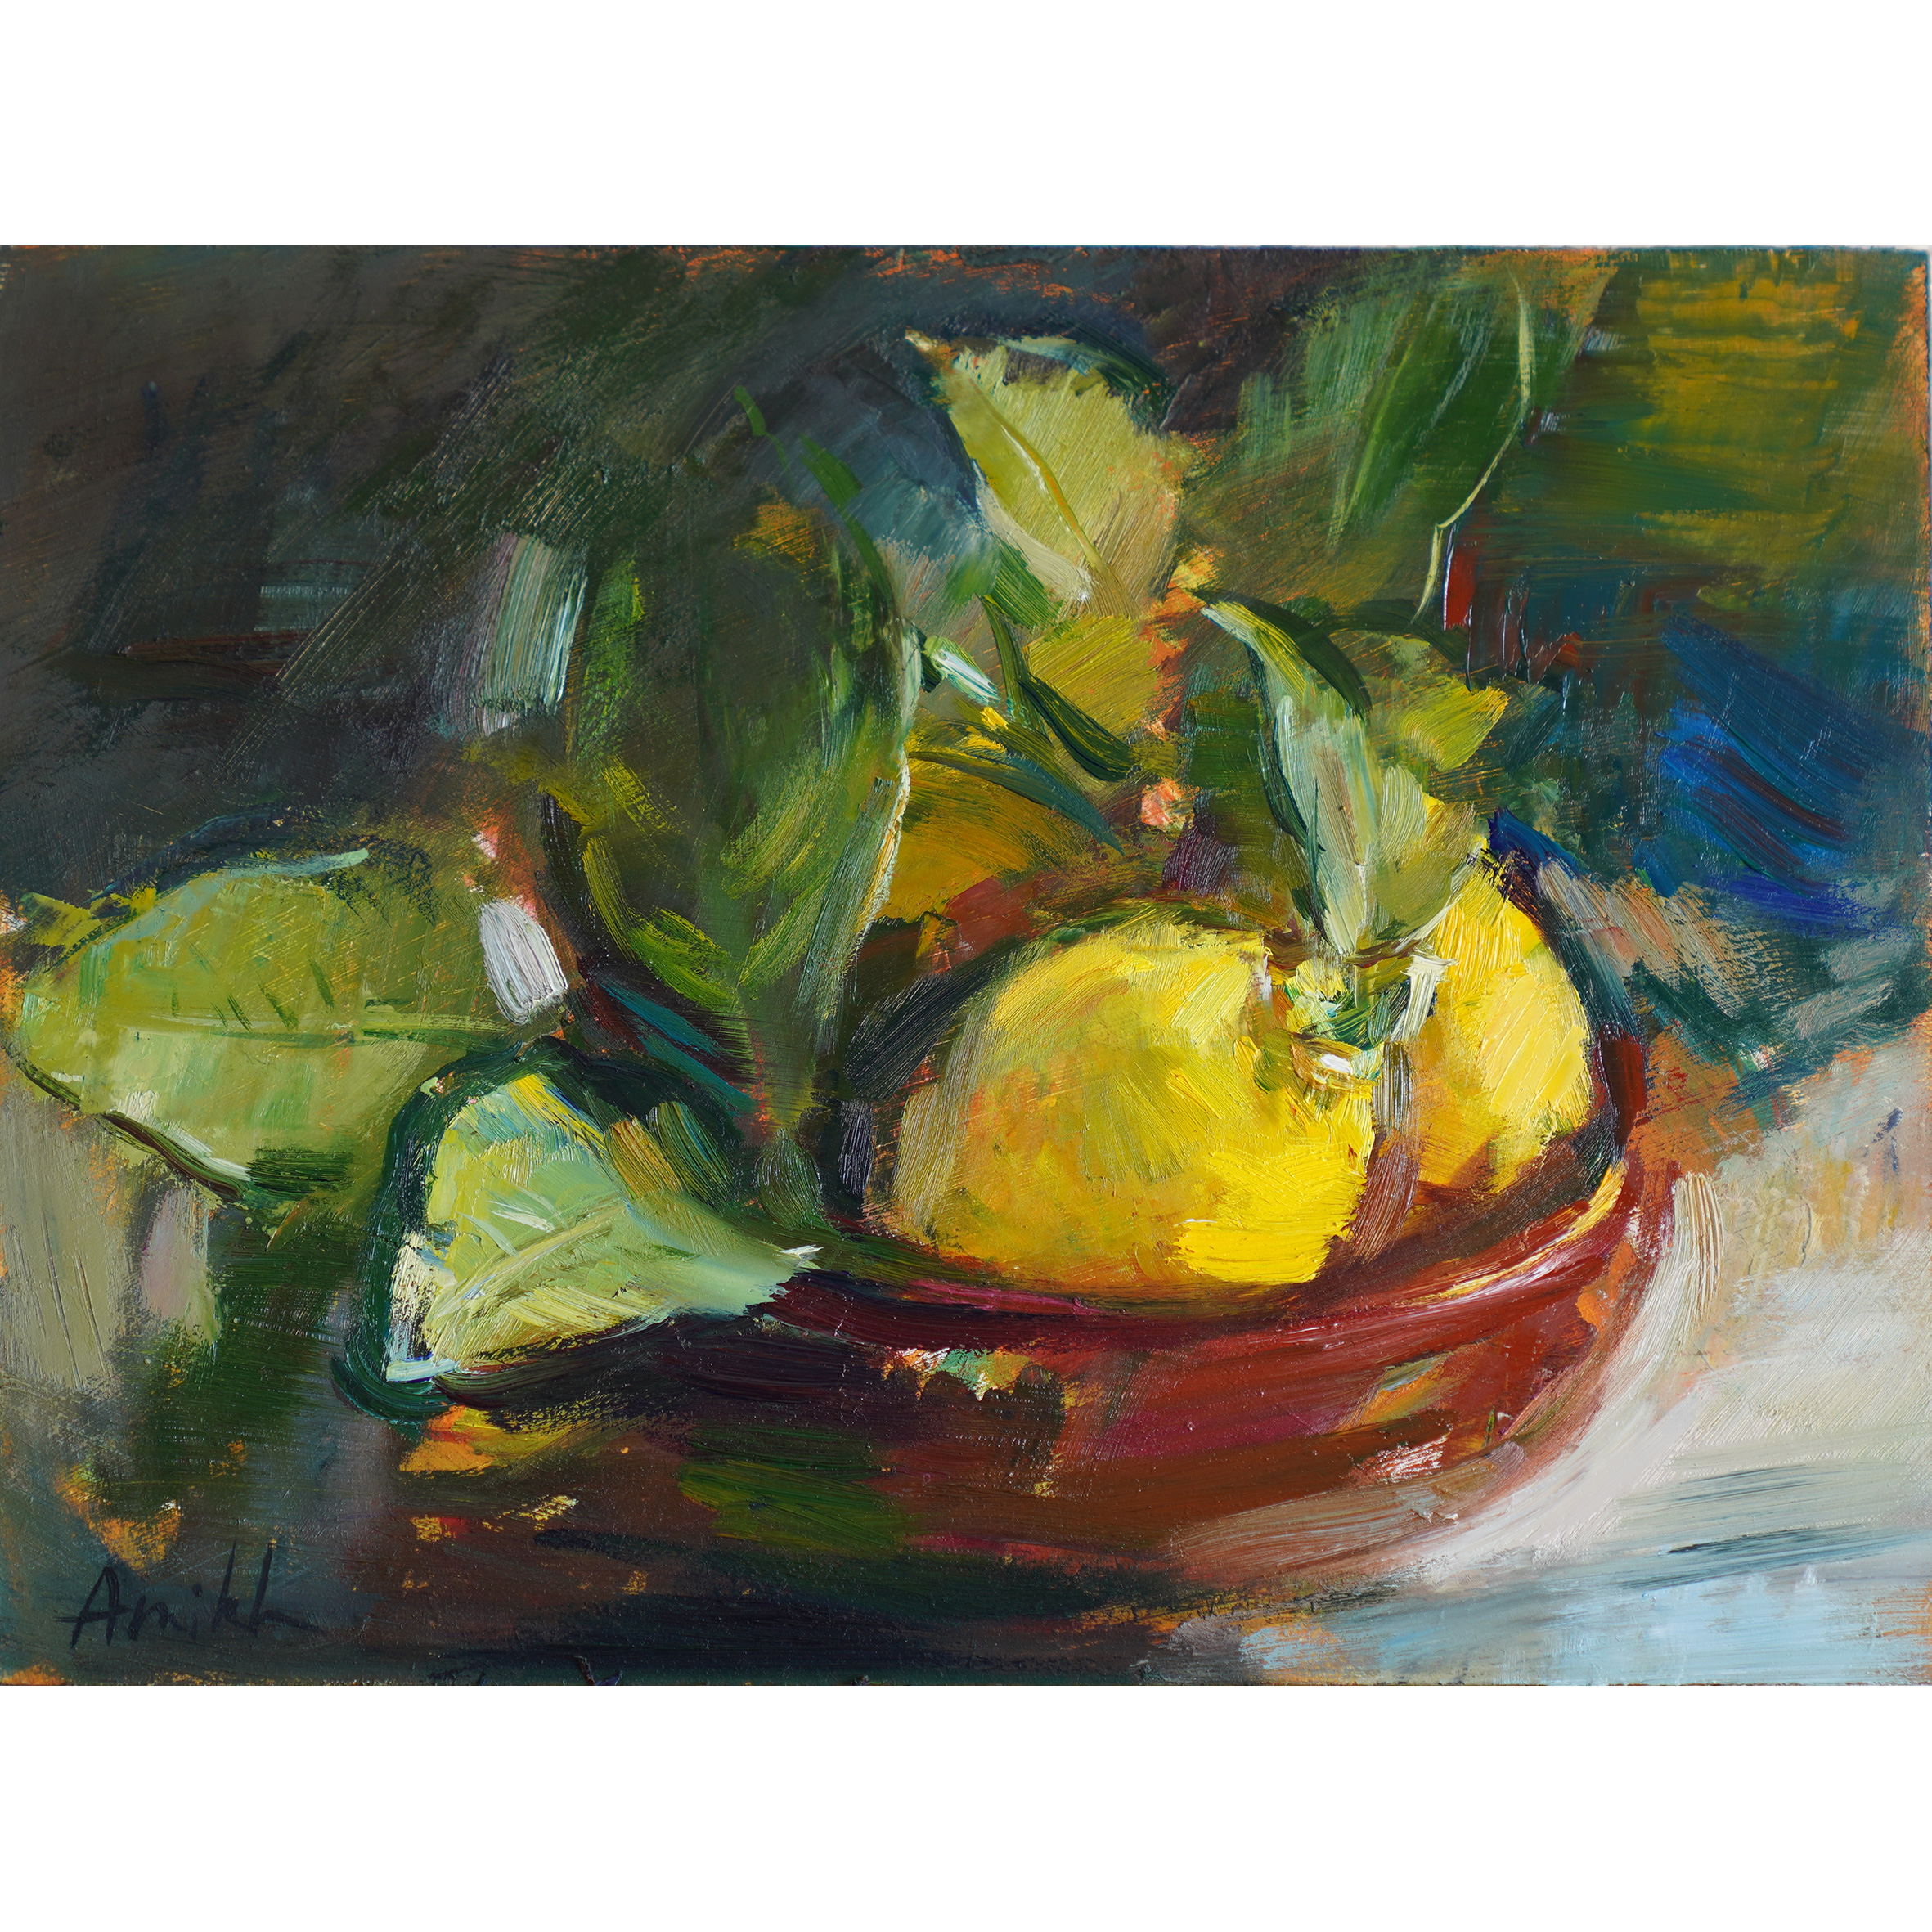 Spanish Lemons in Clay Bowl